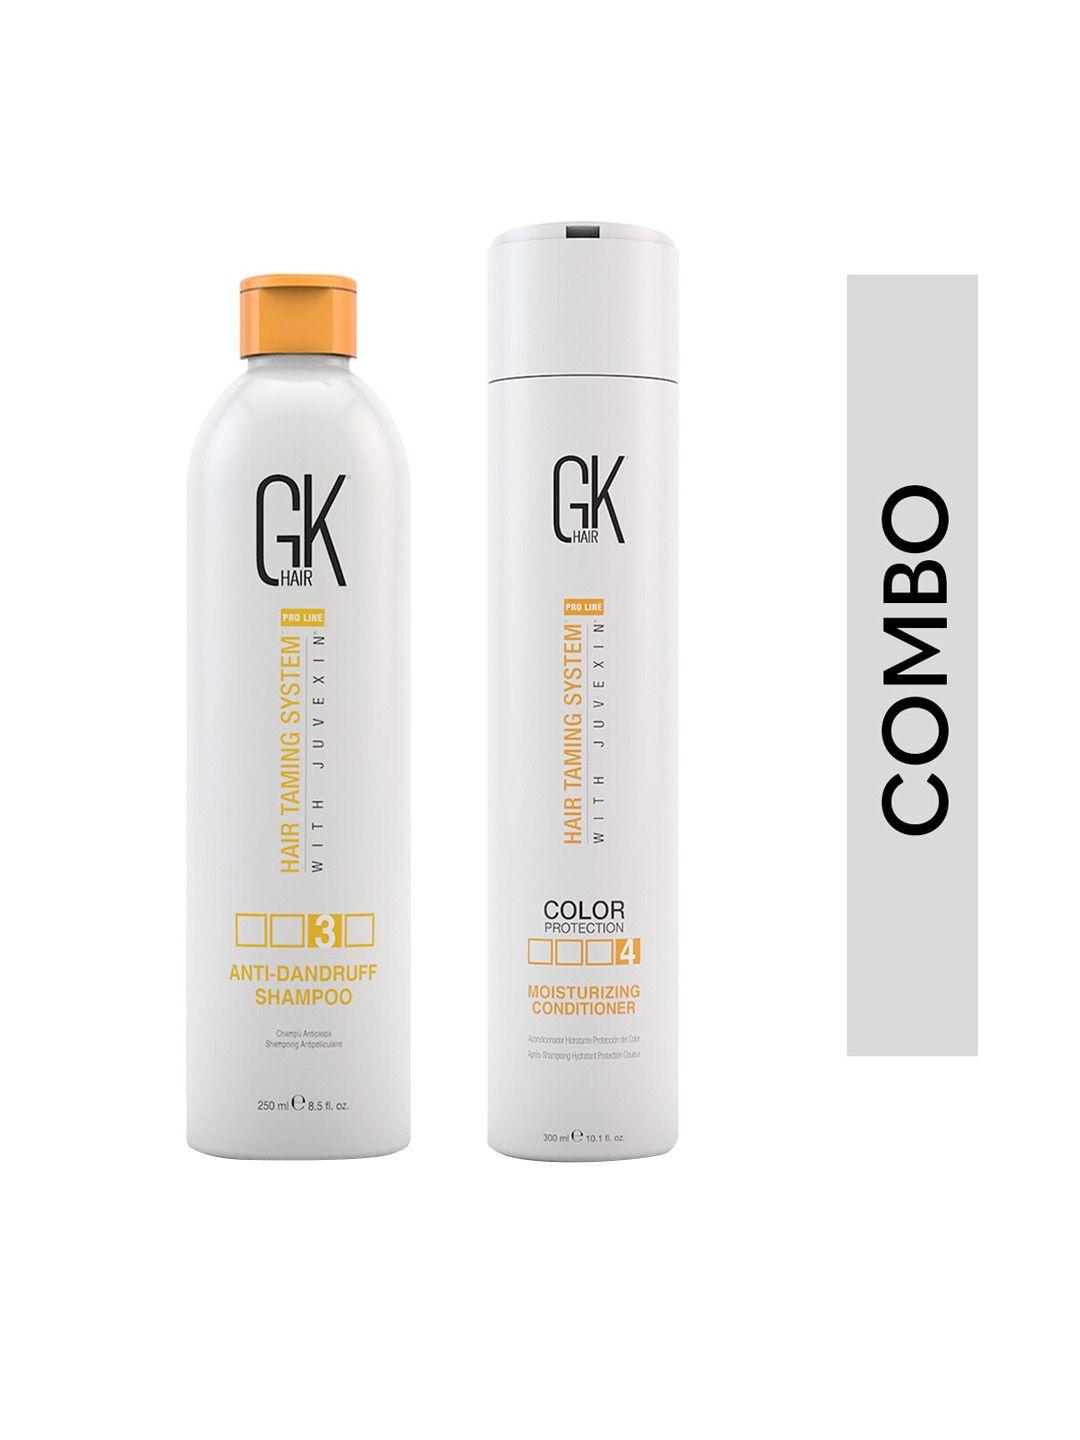 gk hair set of anti-dandruff shampoo - 250 ml & moisturizing conditioner - 300 ml